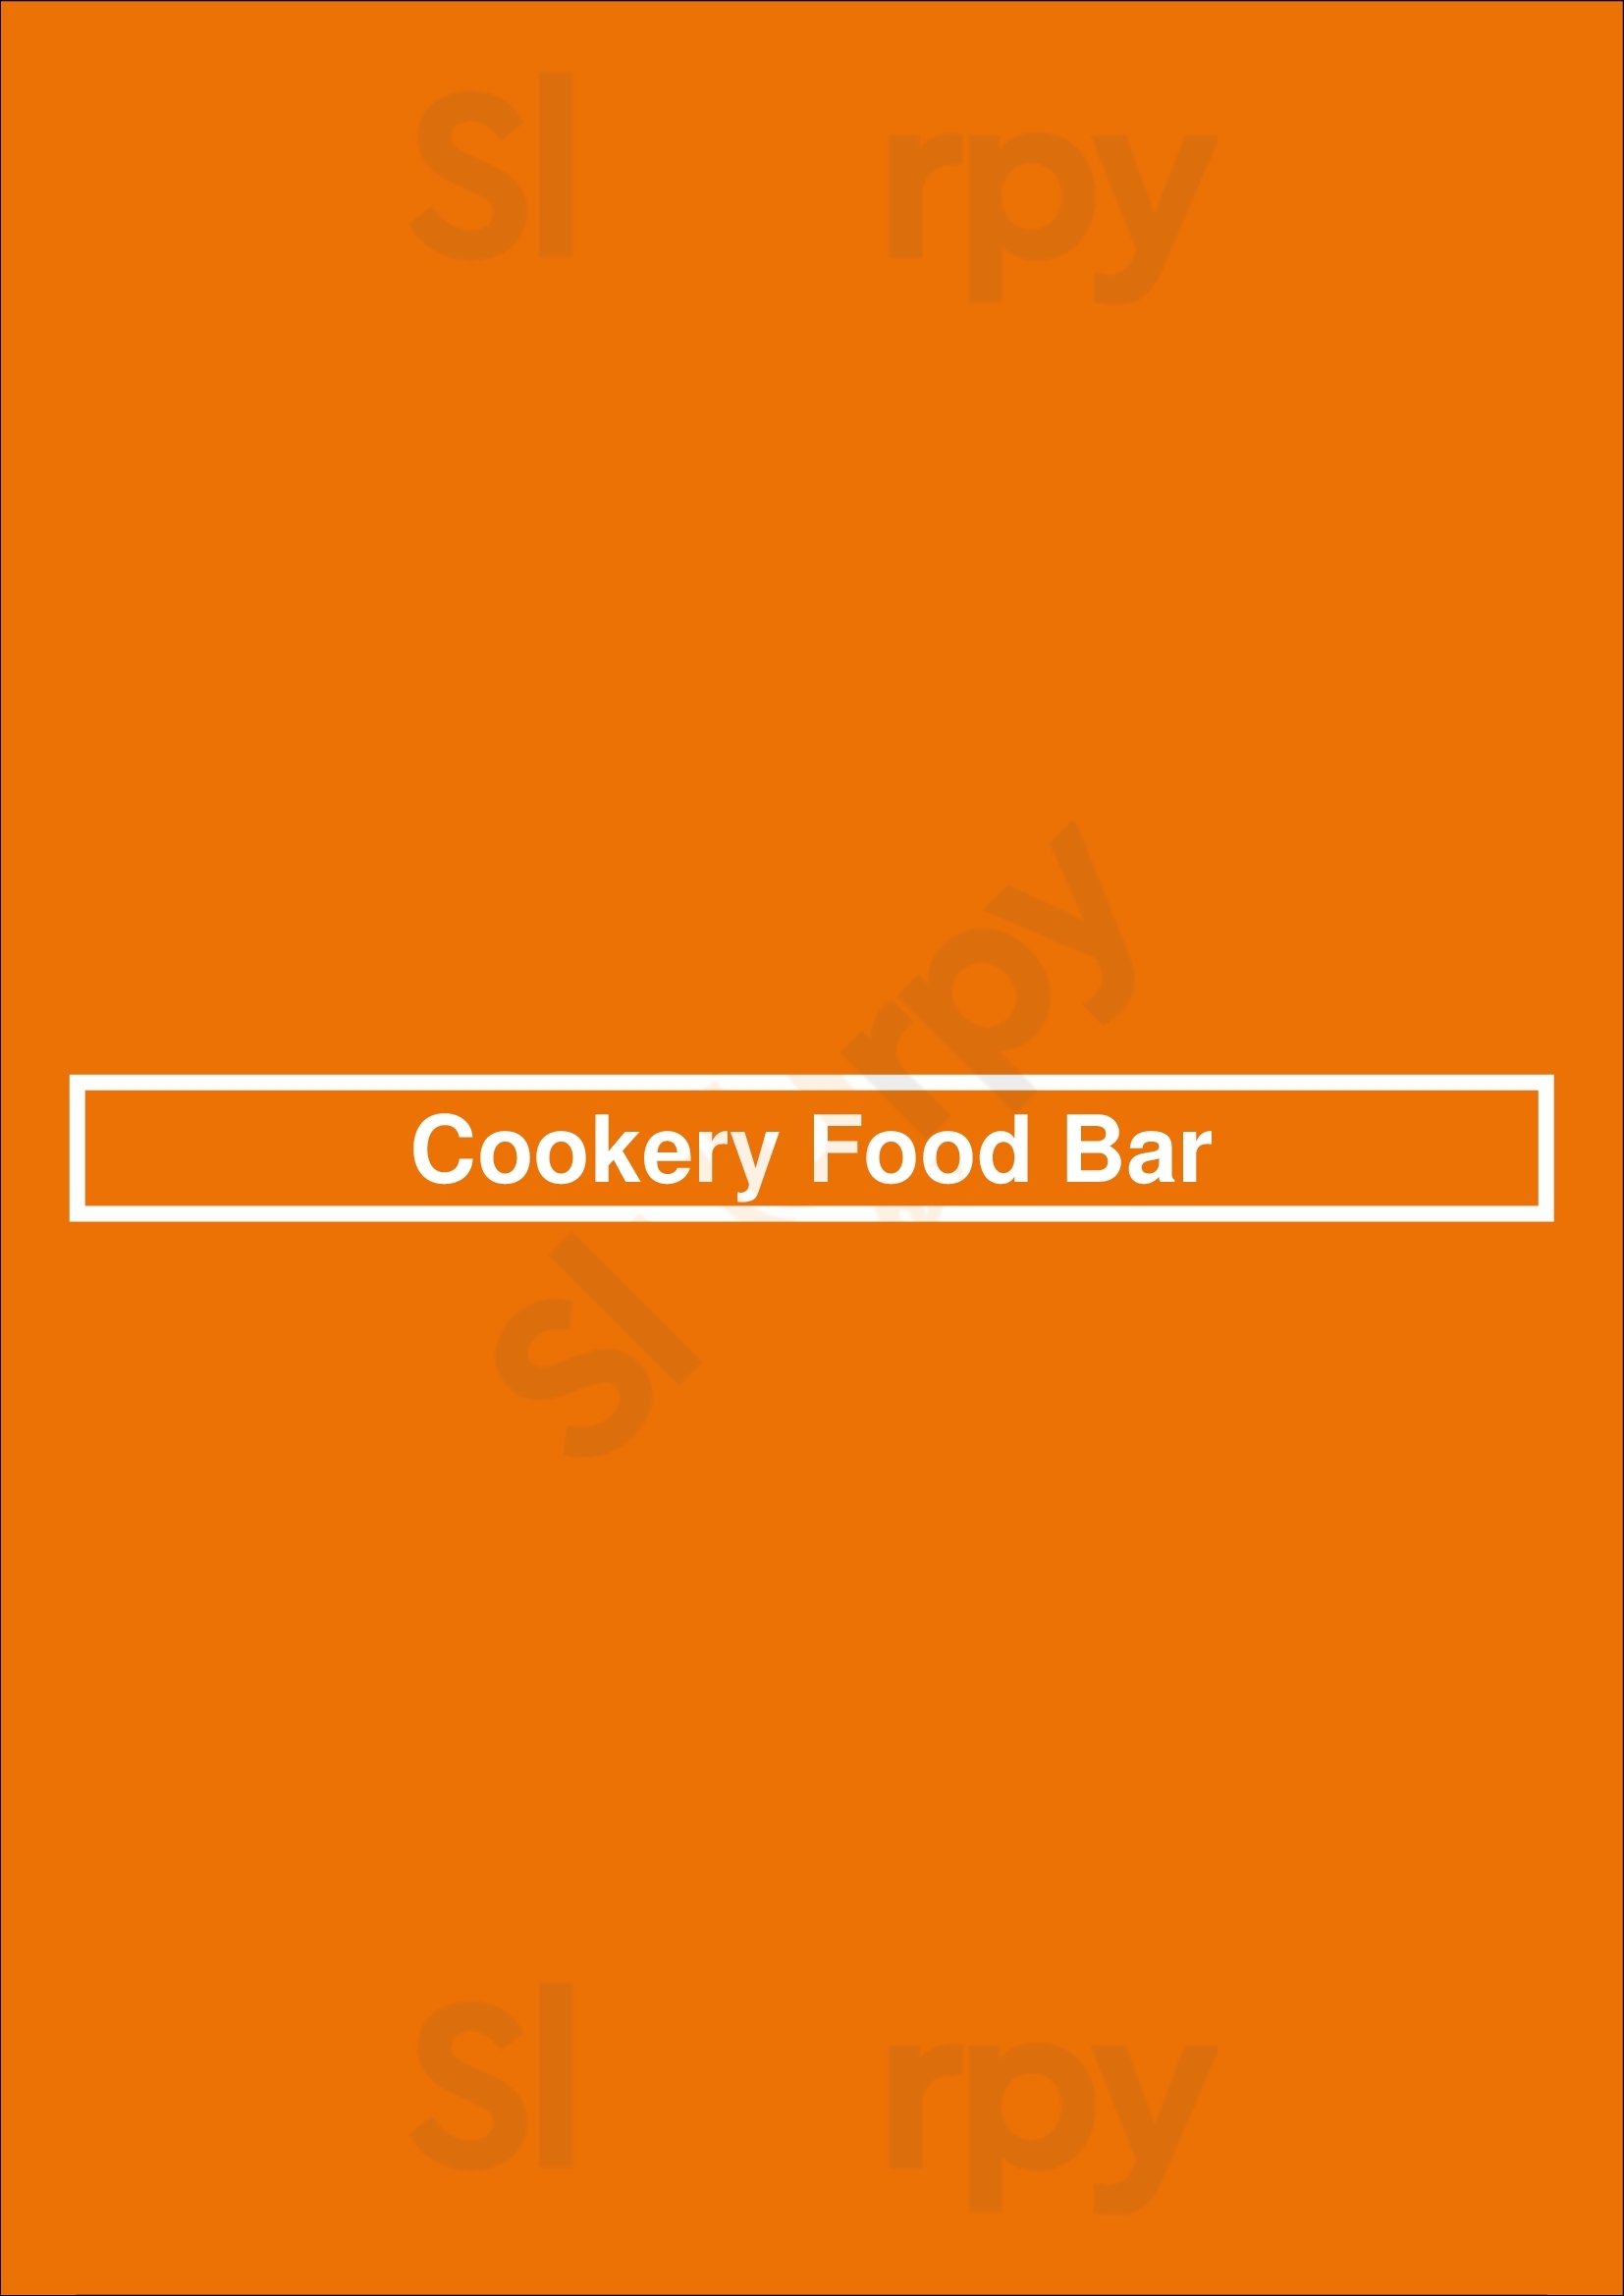 Cookery Food Bar Porto Menu - 1